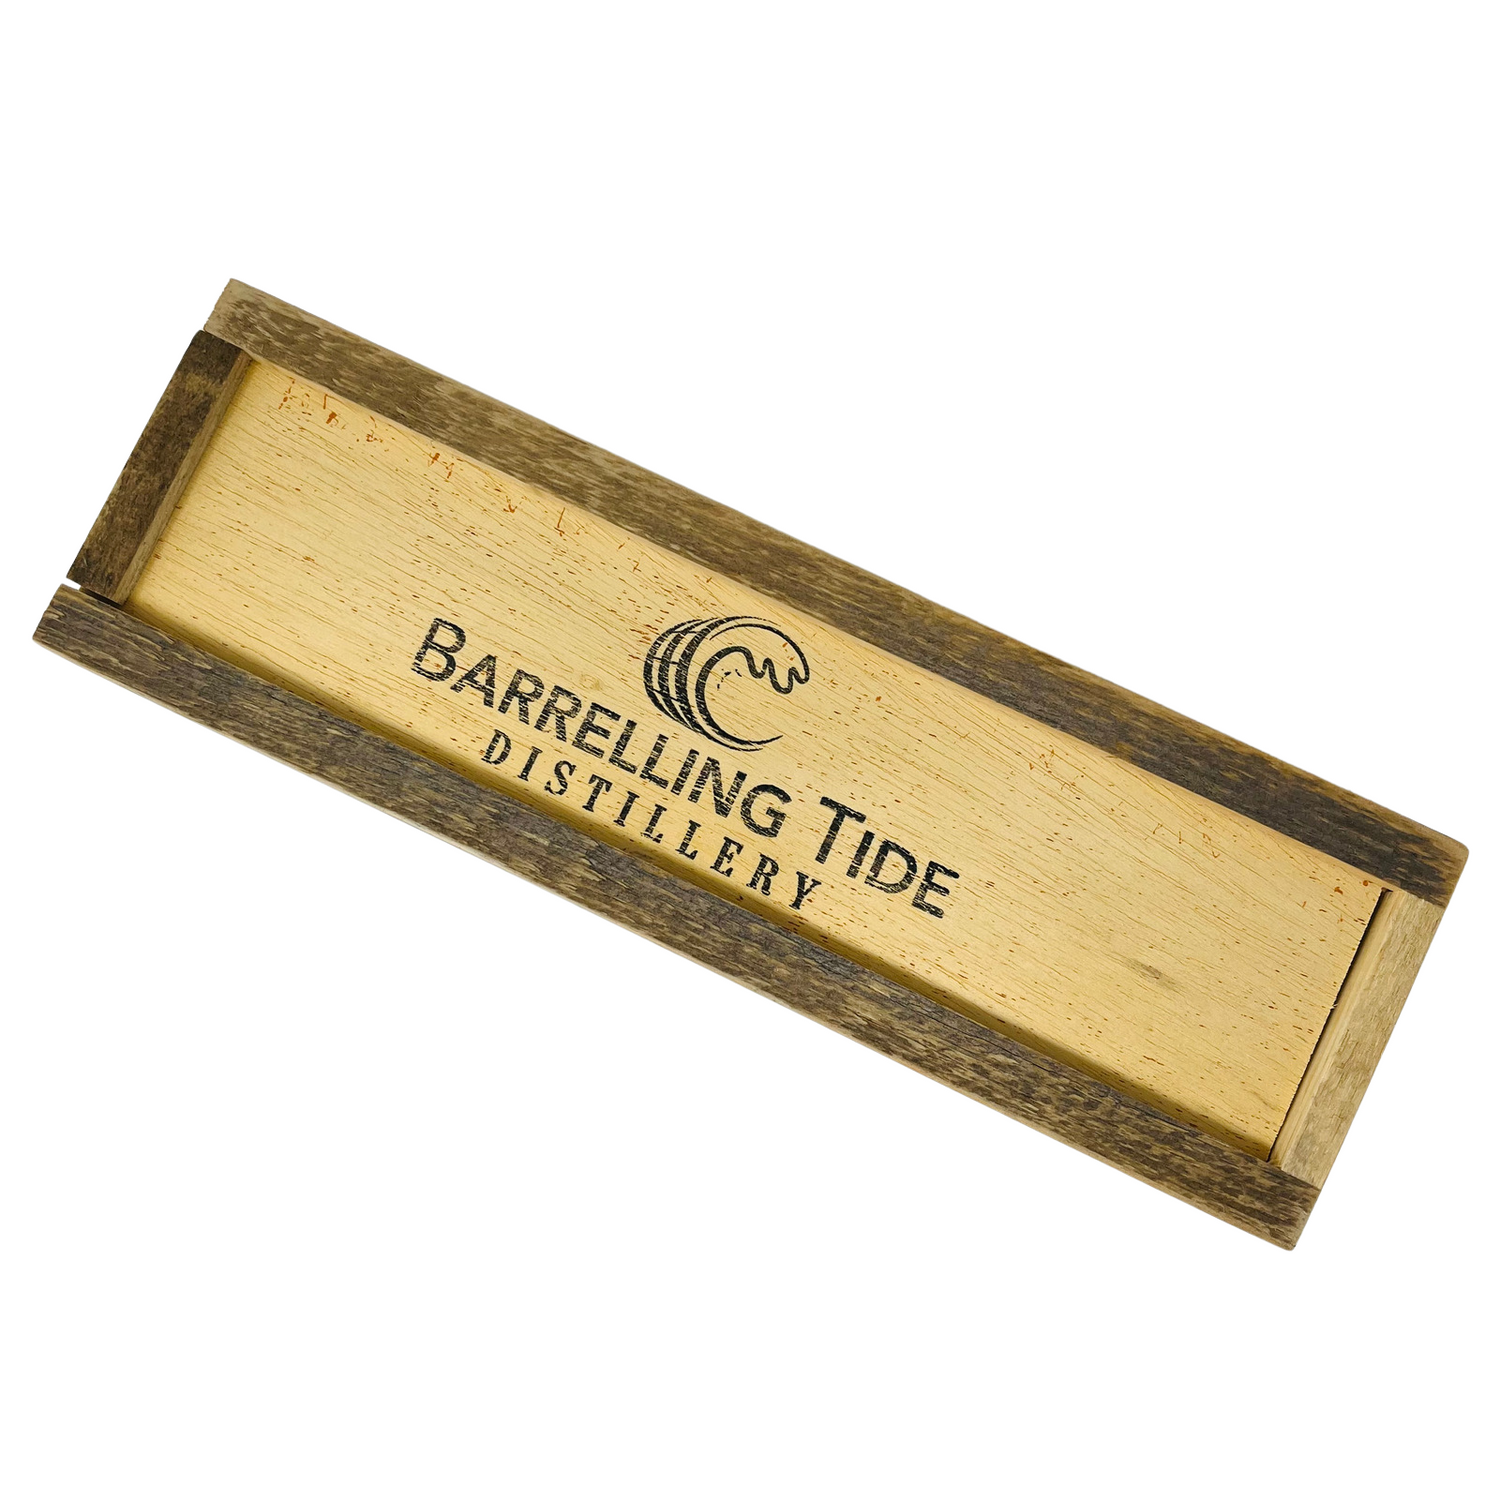 Barrelling Tide Wooden Gift Box